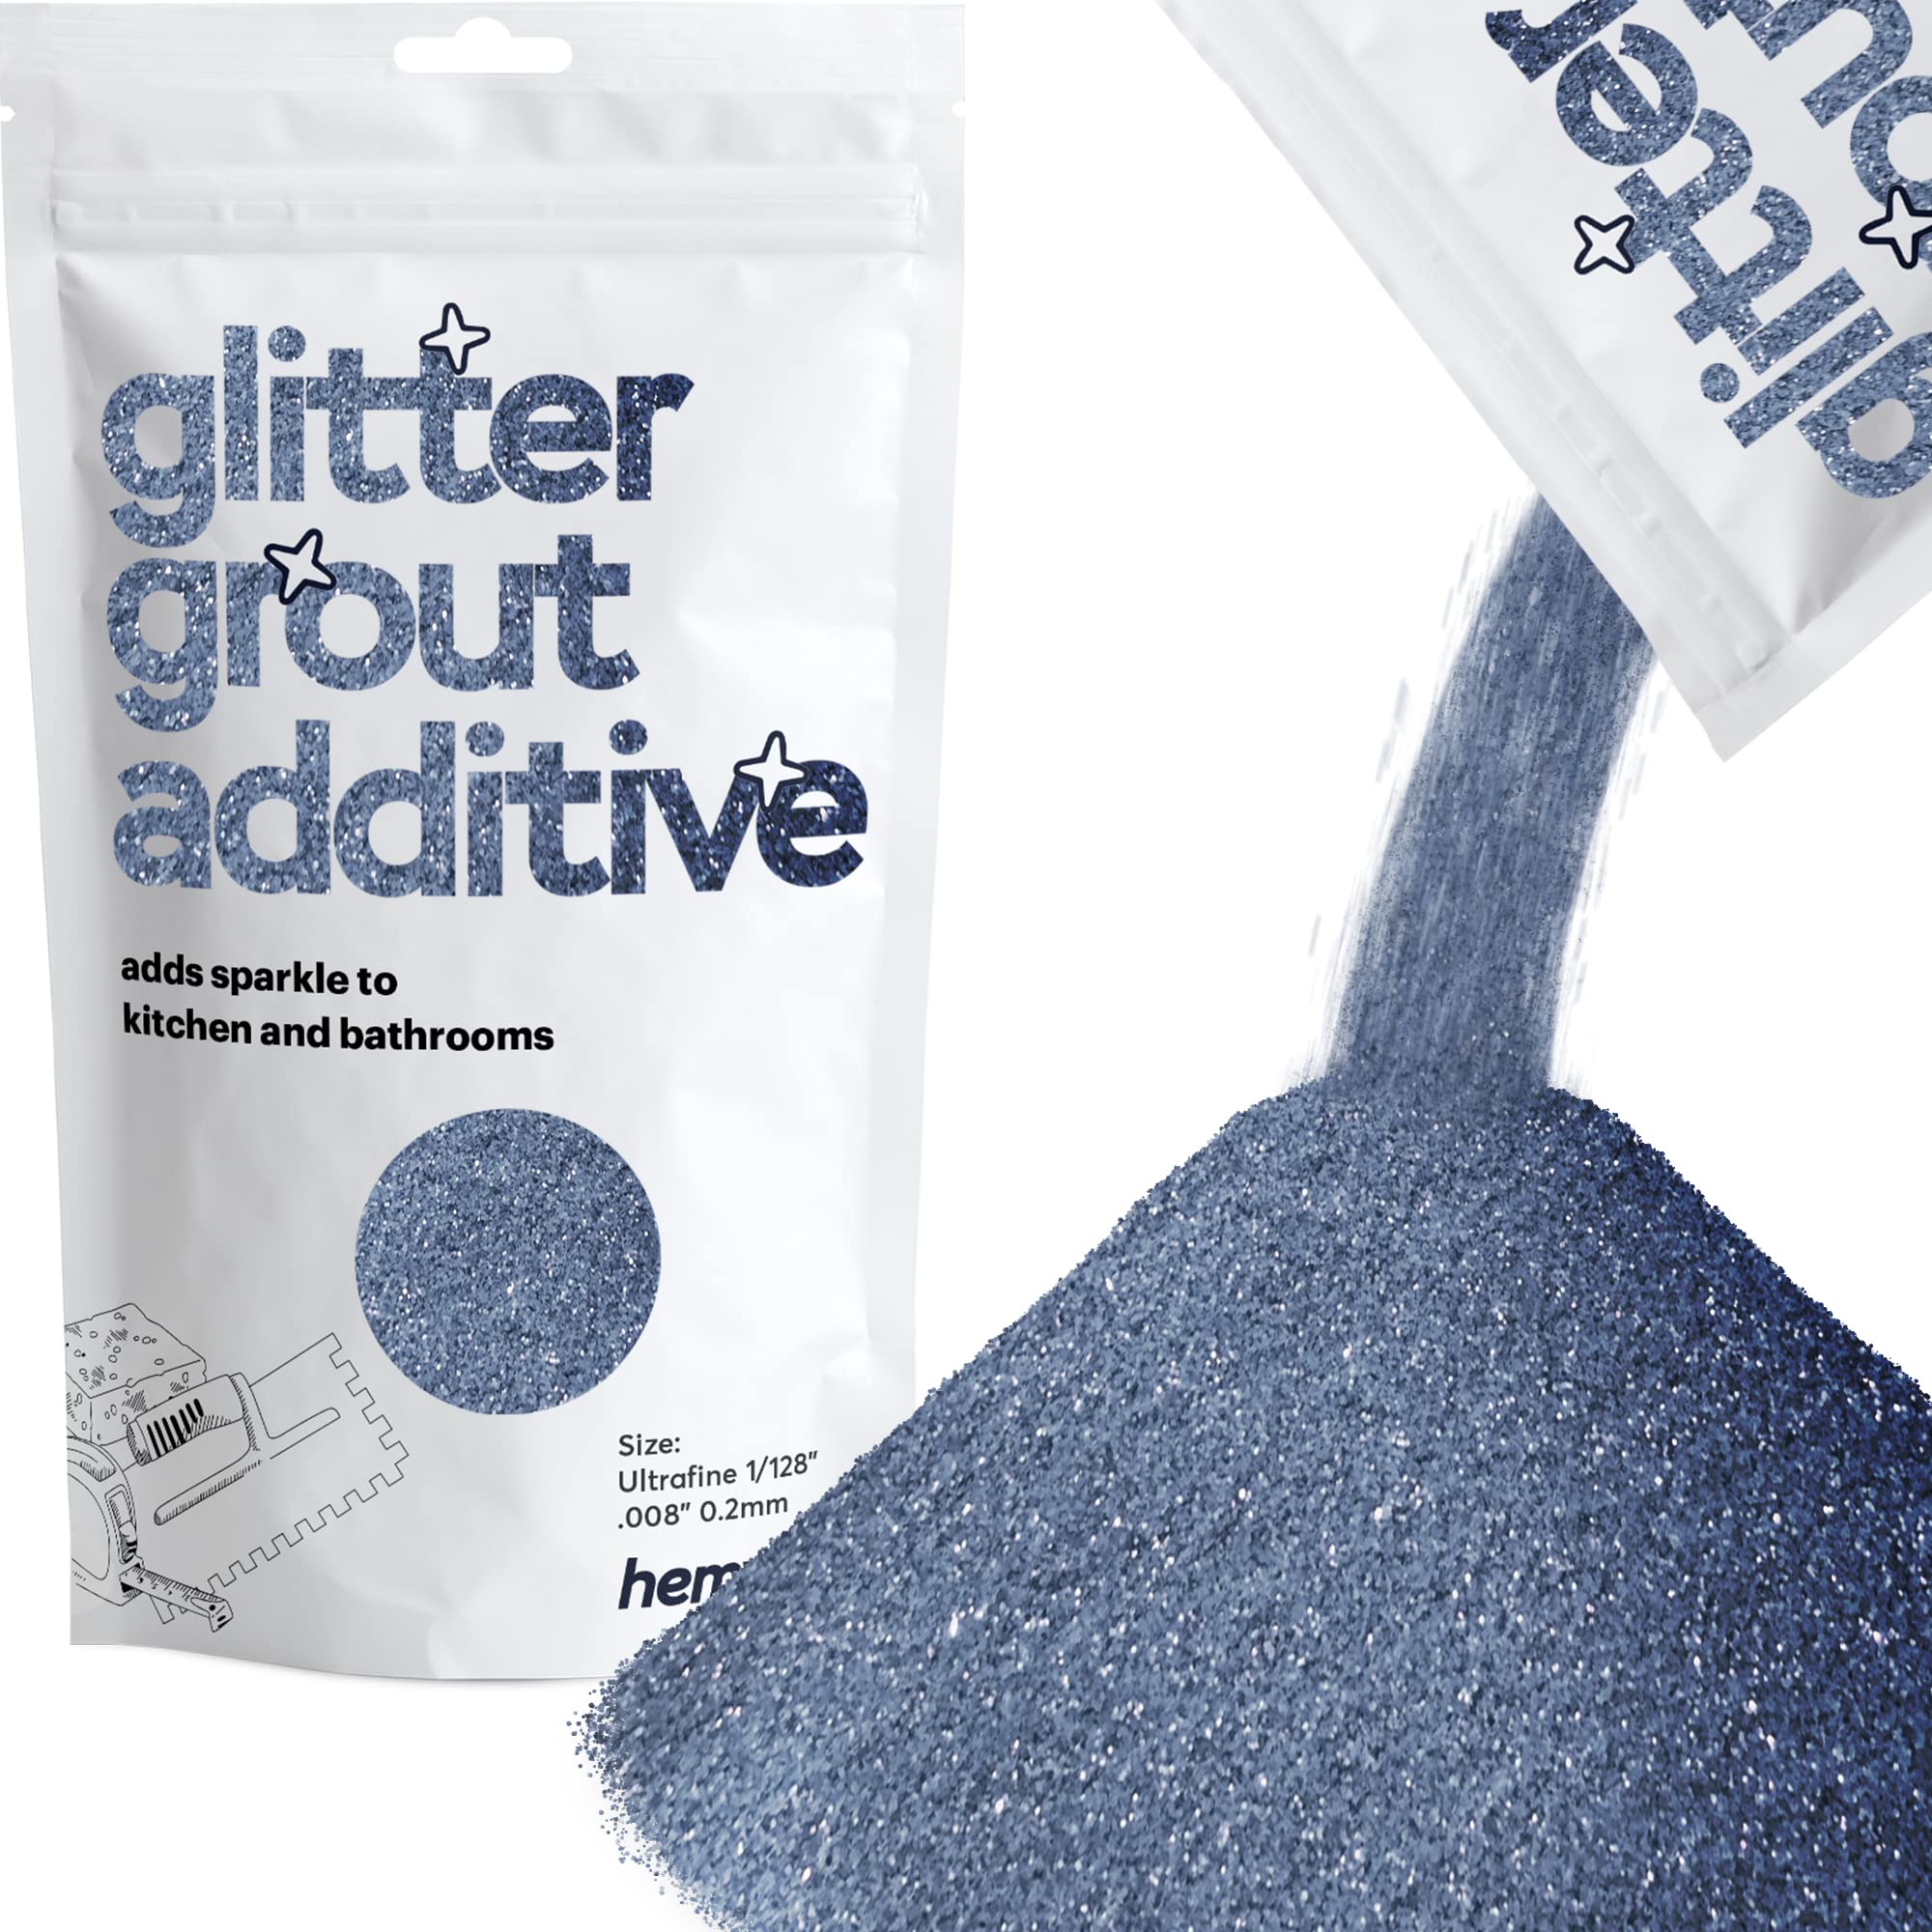 Hemway Glitter Grout Additiv (Ultrafein 1/128" 0,008" 0,2 mm) Grout Tile Additive Fliesen Bad Nassraum Küche - Azure Blue - 100g